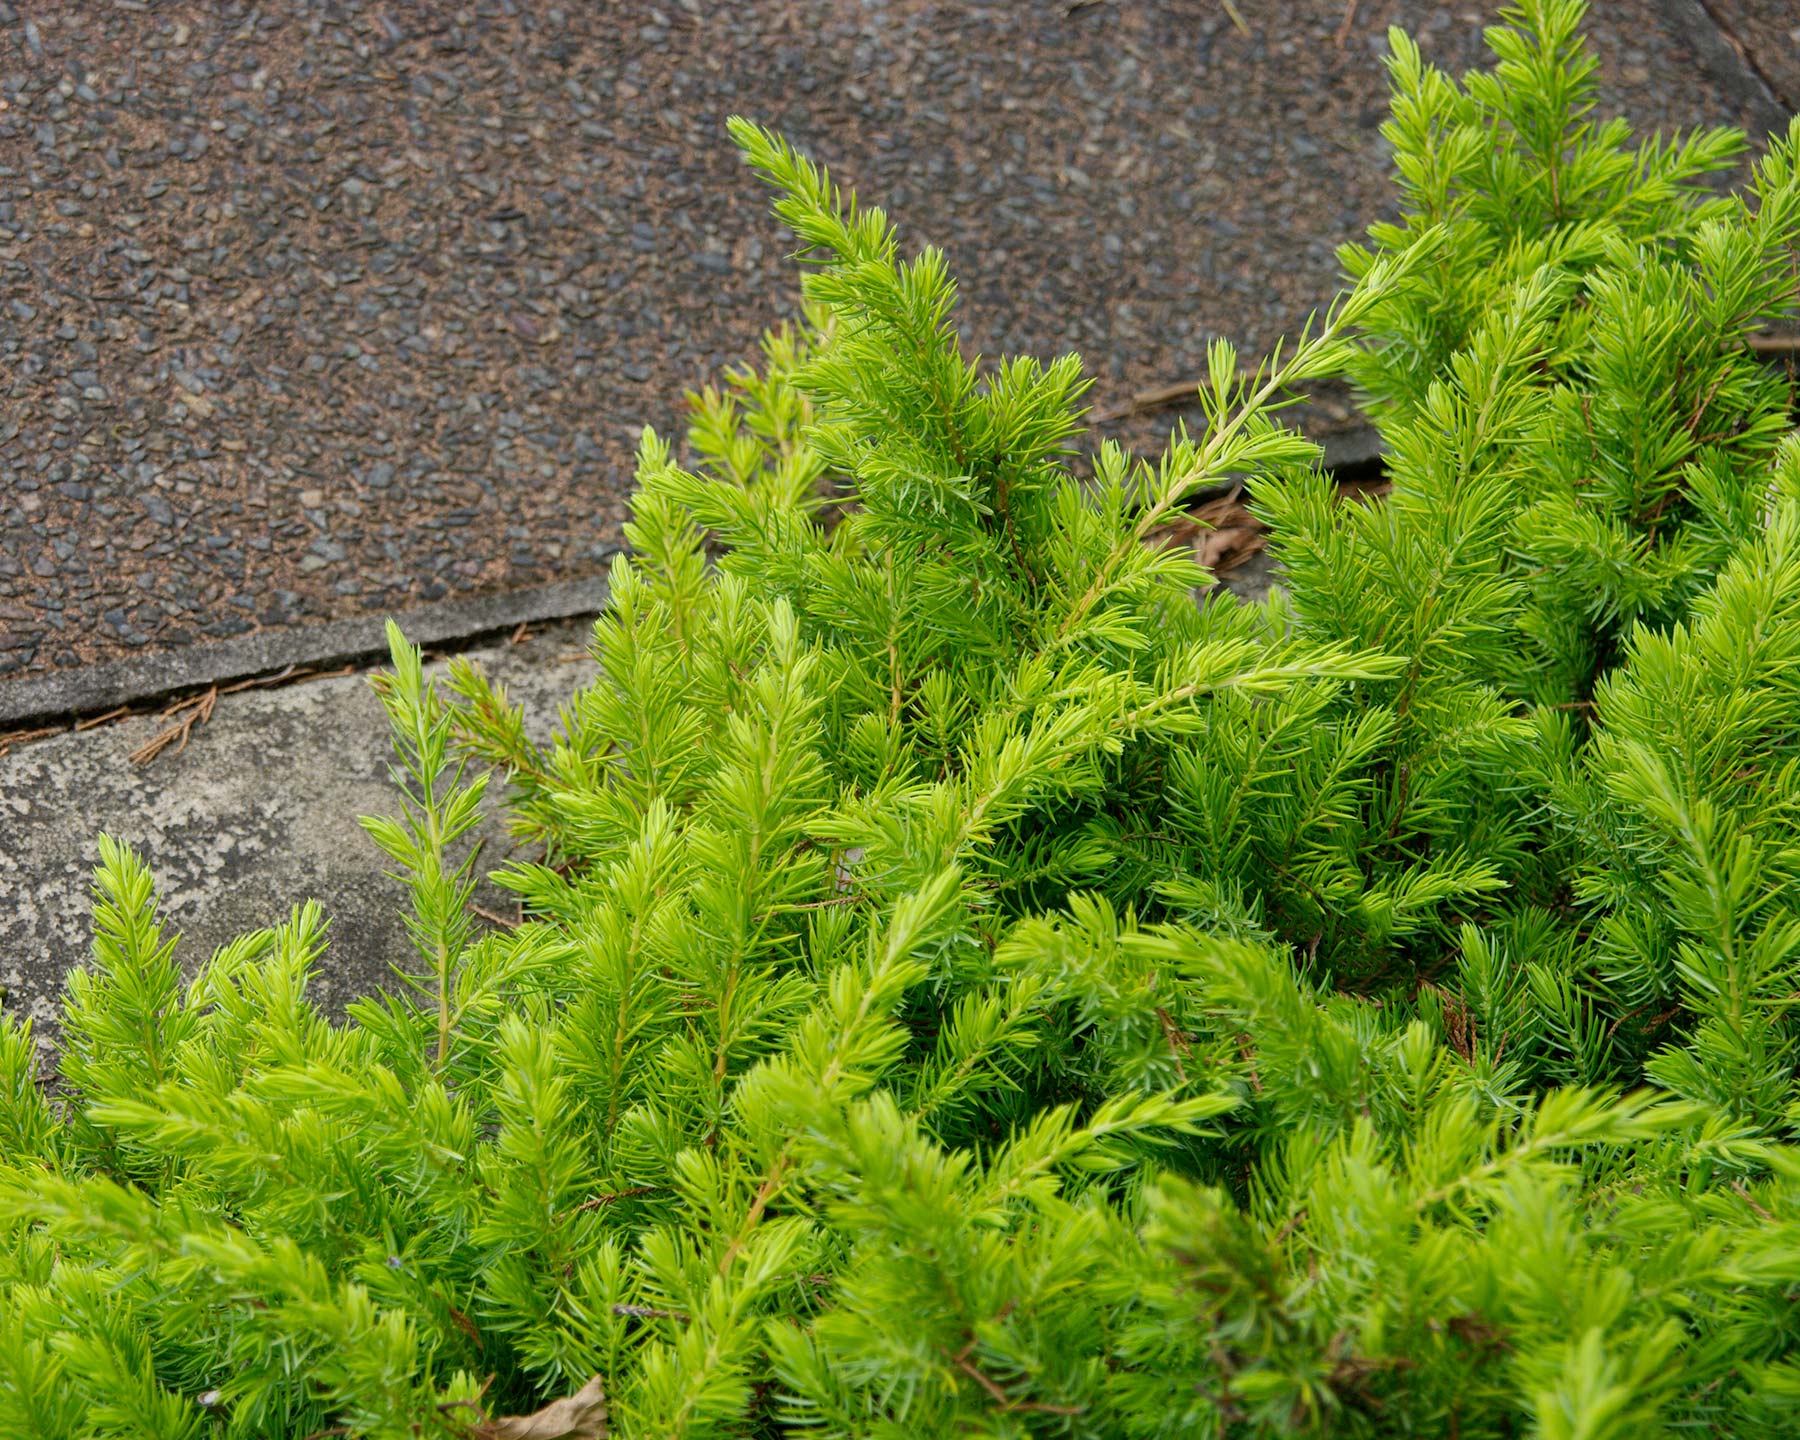 Juniperus conferta - this is All Gold